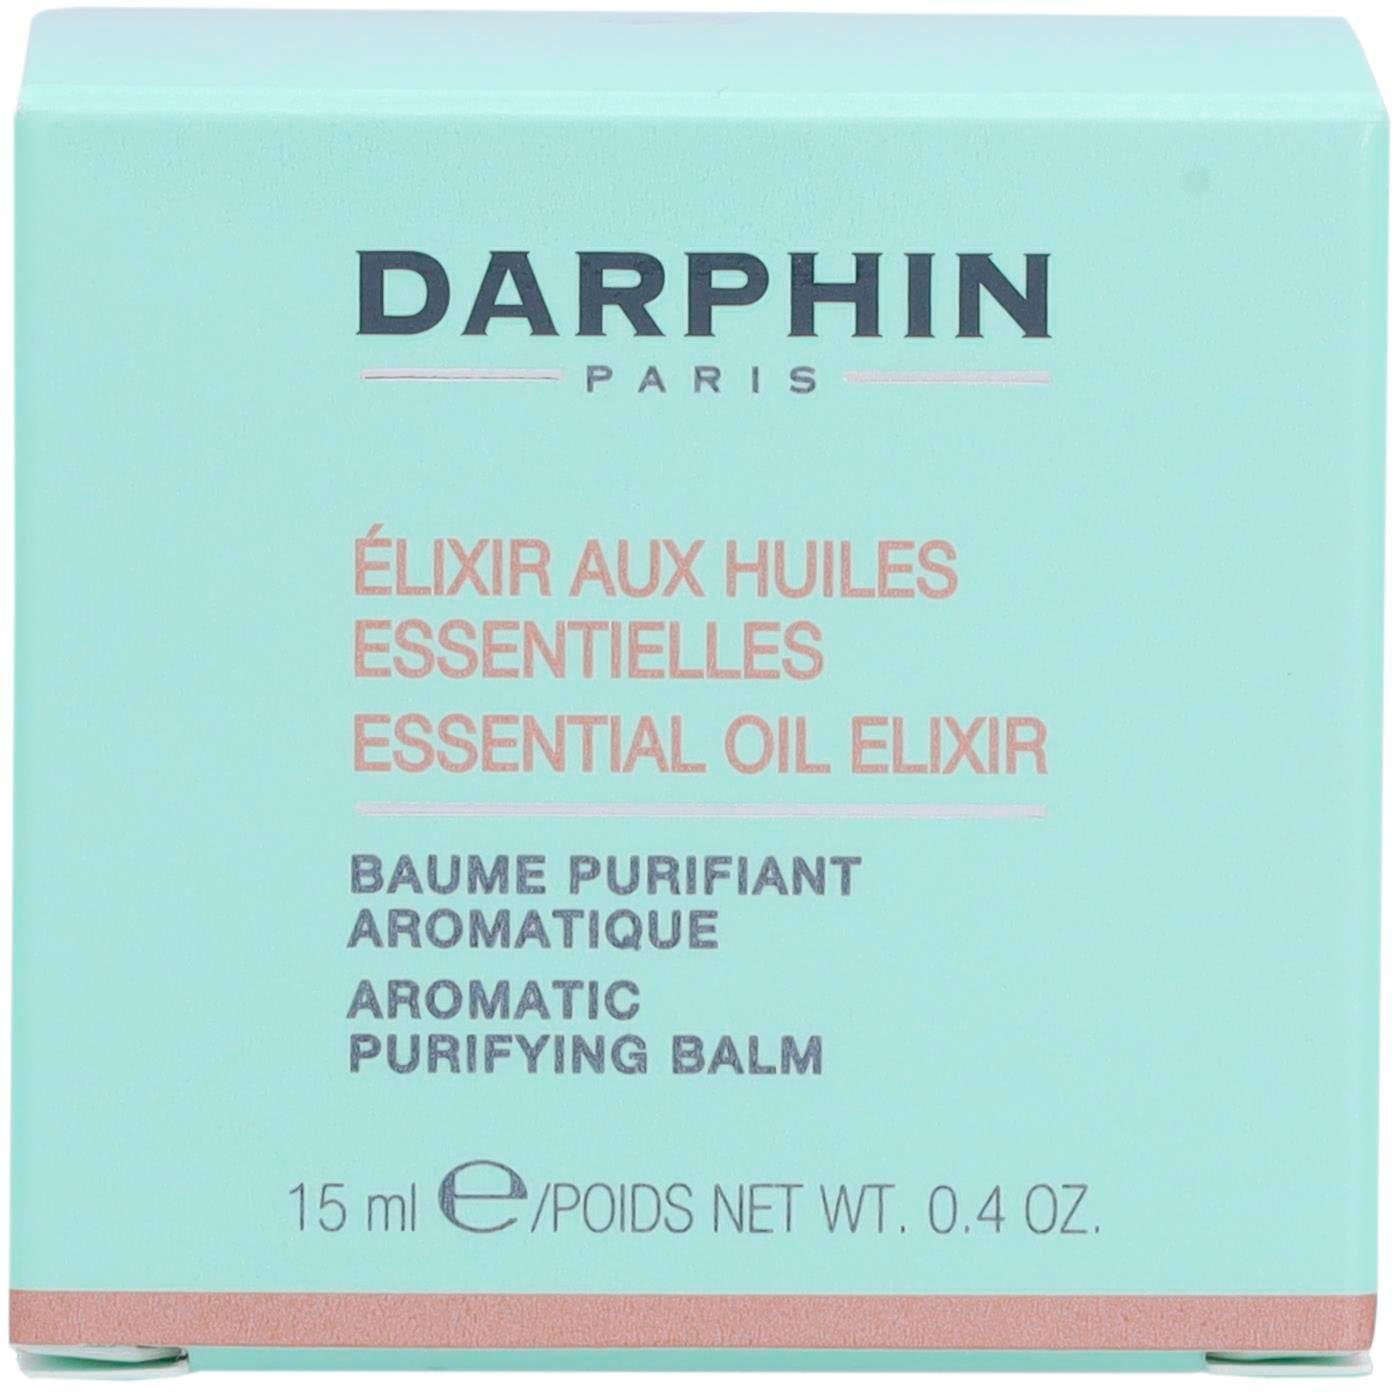 Purifying Balm Gesichtspflege Darphin Aromatic